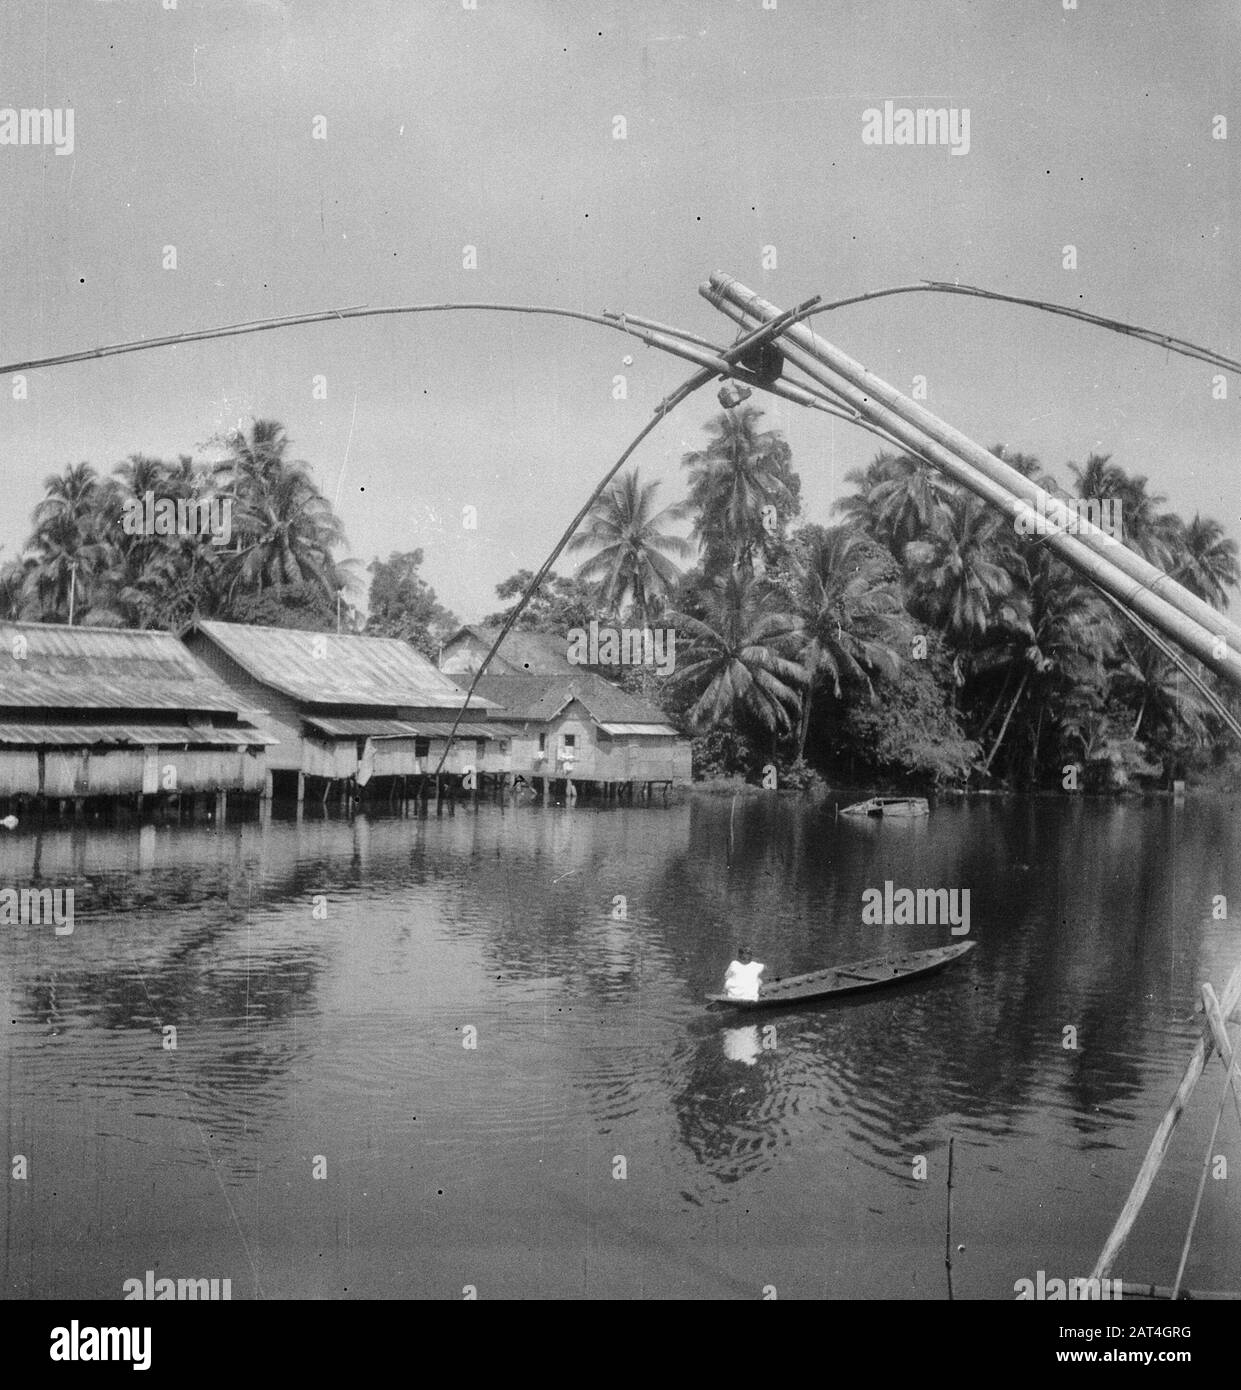 Djambi, return resident Raden Kartopati  Jambi Date: 2 January 1949 Location: Indonesia, Jambi, Dutch East Indies, Sumatra Stock Photo